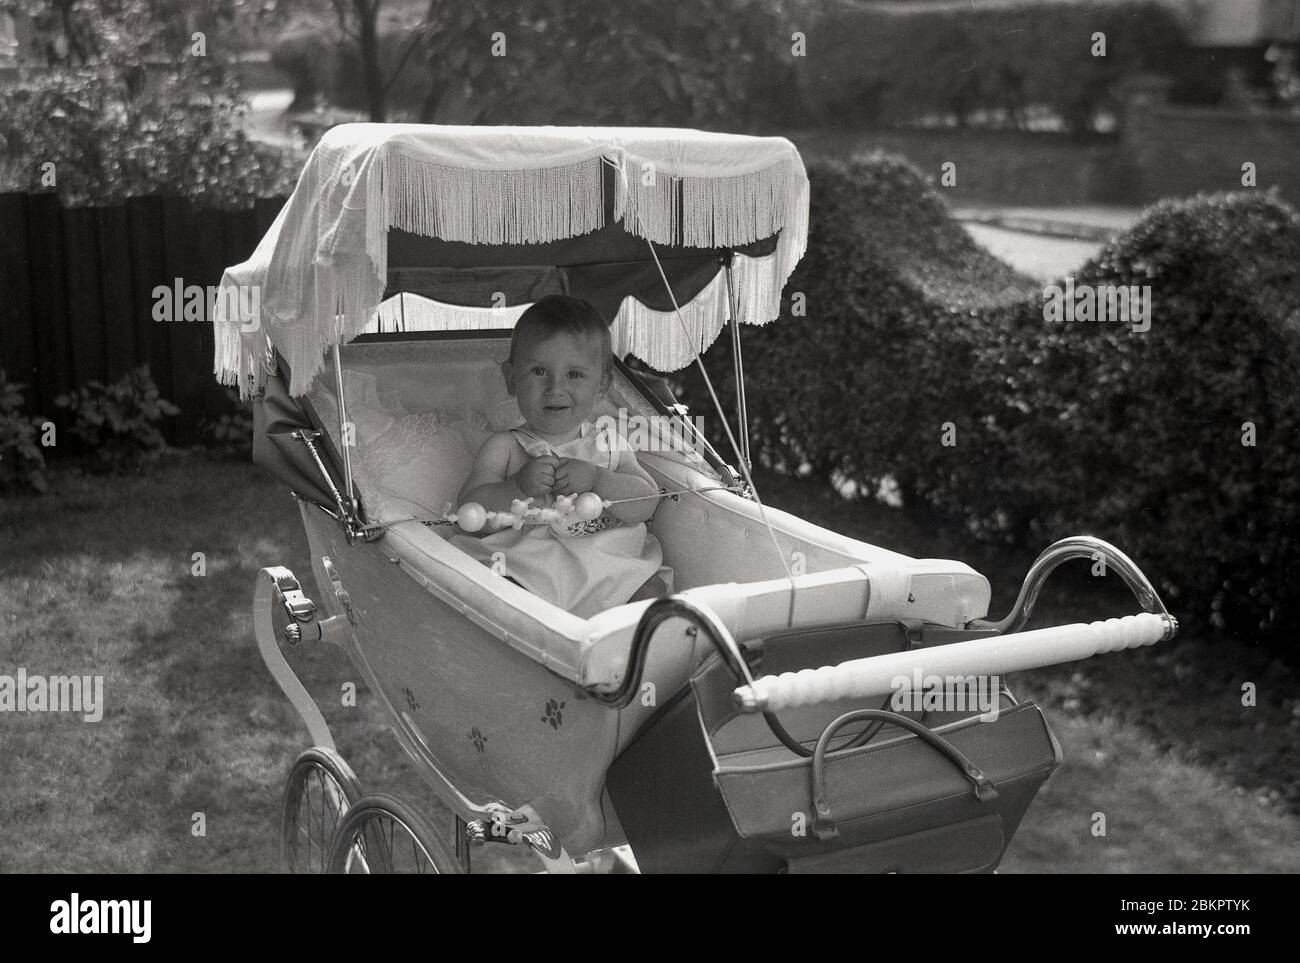 1950 baby stroller